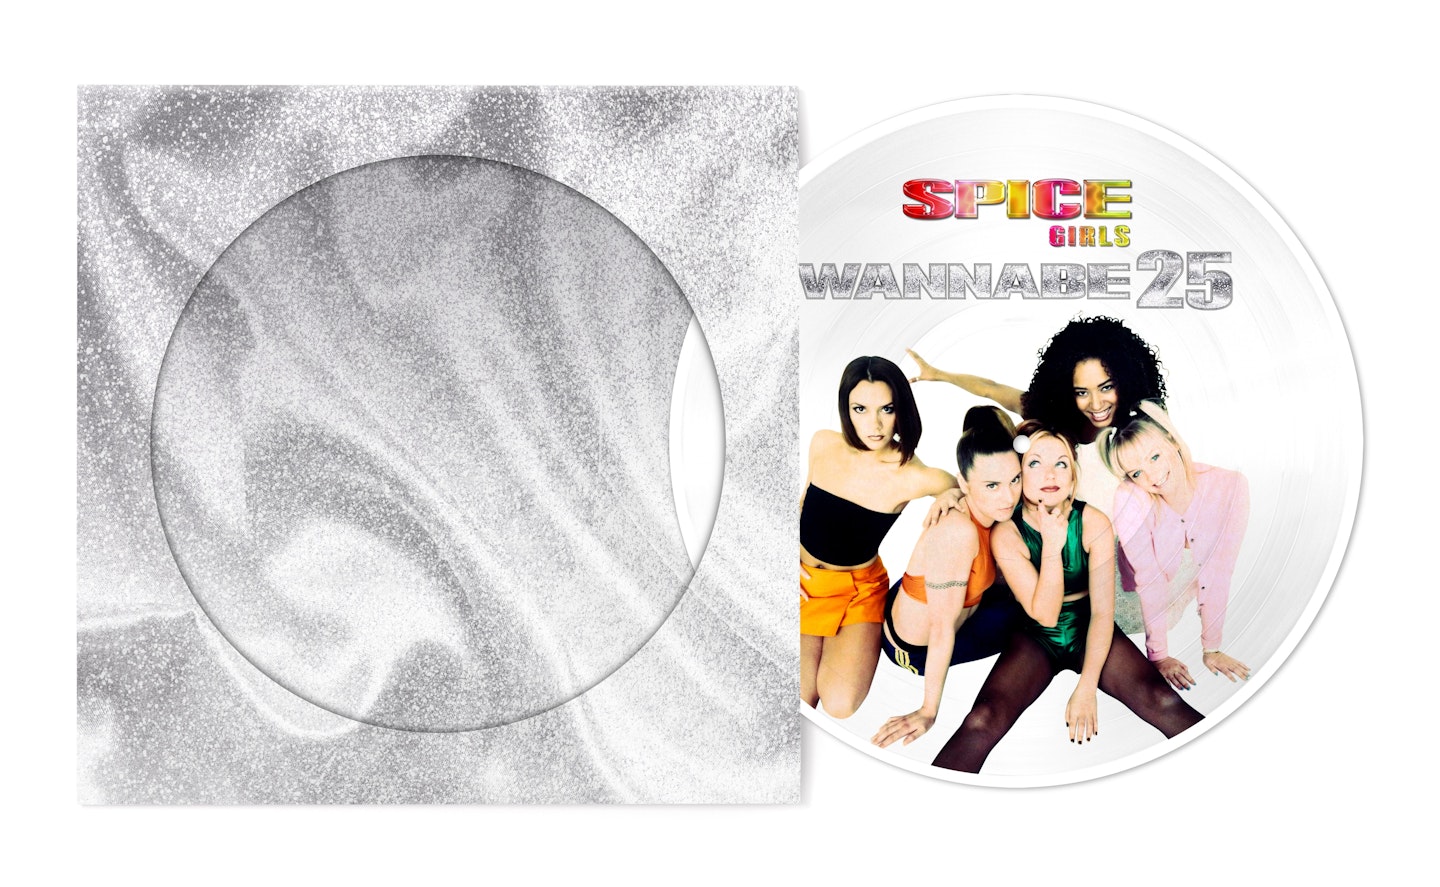 Spice Girls Wannabe 25th anniversary Scary Sporty Ginger Baby Posh Spice Victoria Beckham Emma Bunton Geri Halliwell Horner Mel B Mel C